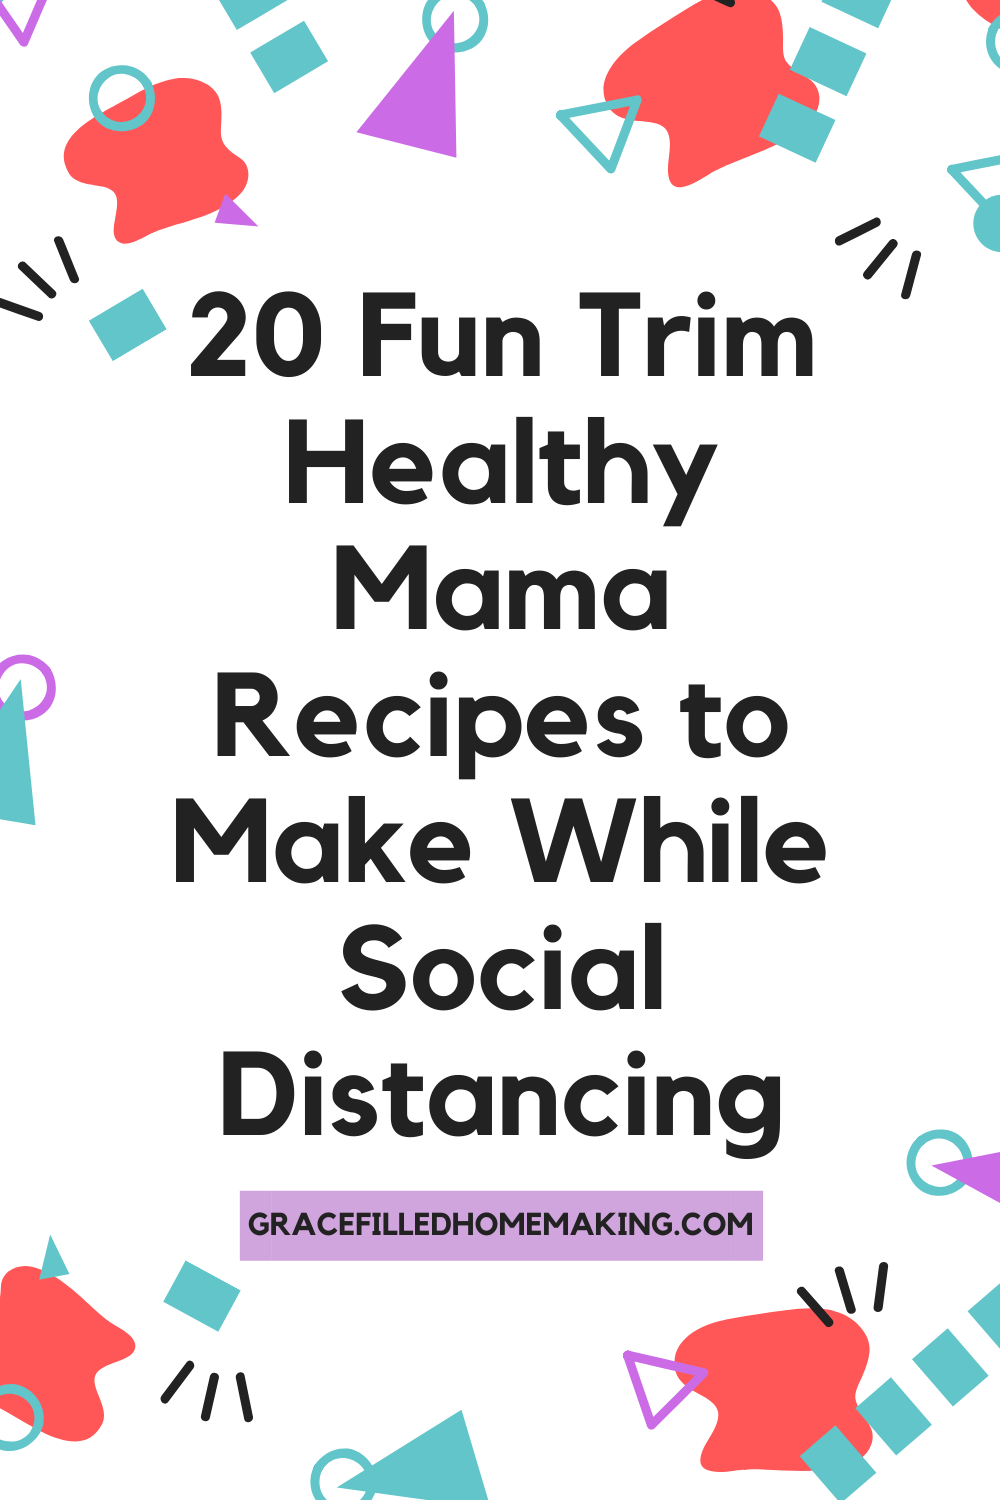 Fun Trim Healthy Mama Recipes